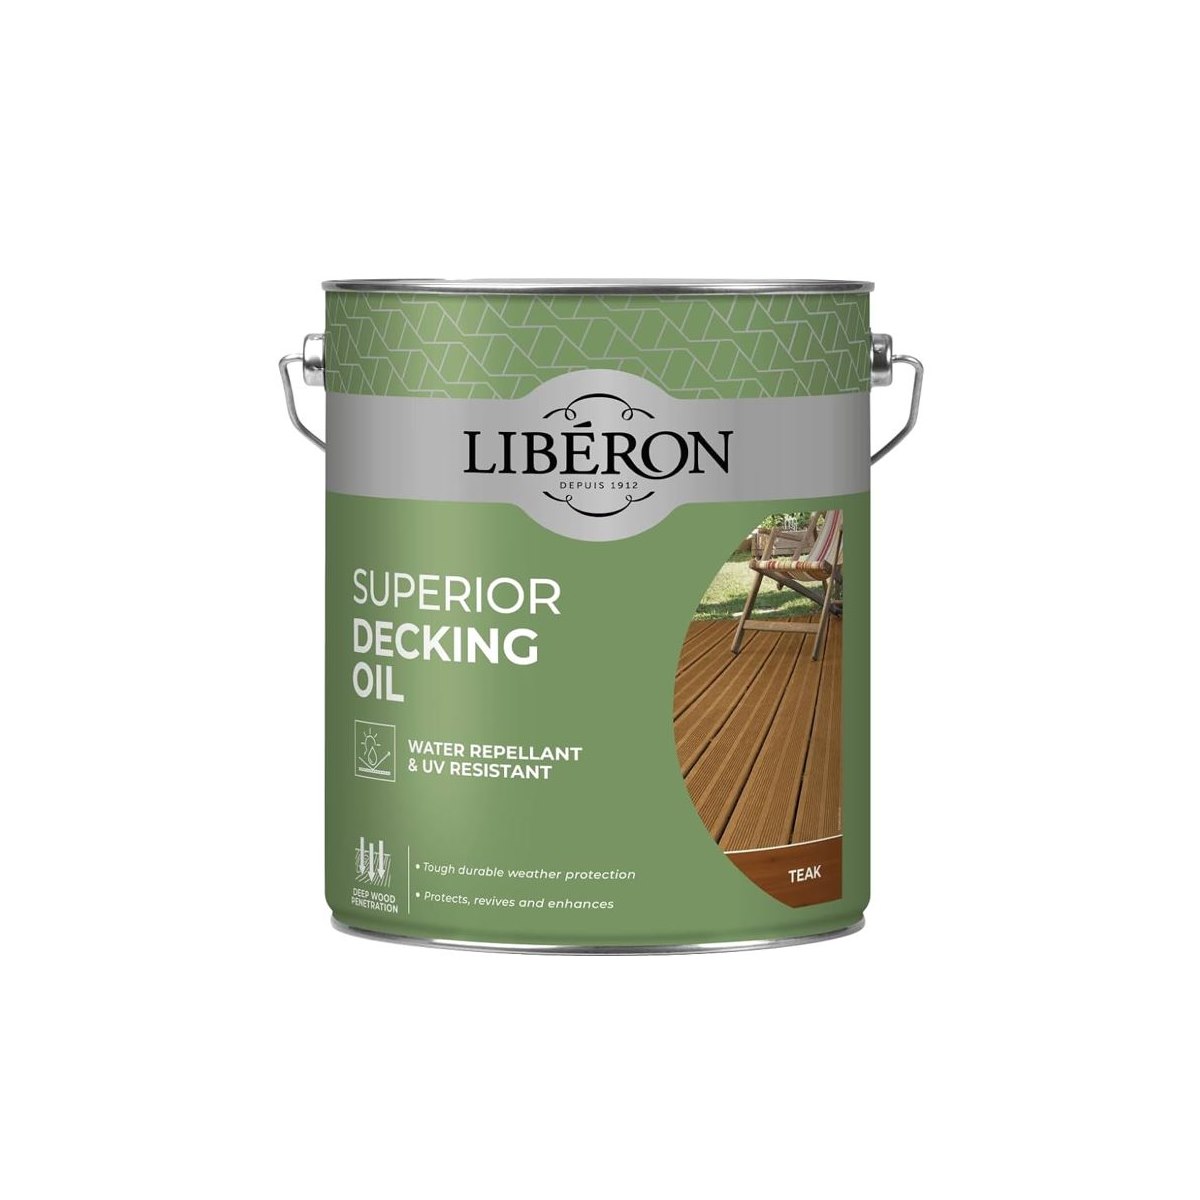 Liberon Superior Decking Oil 5L Teak